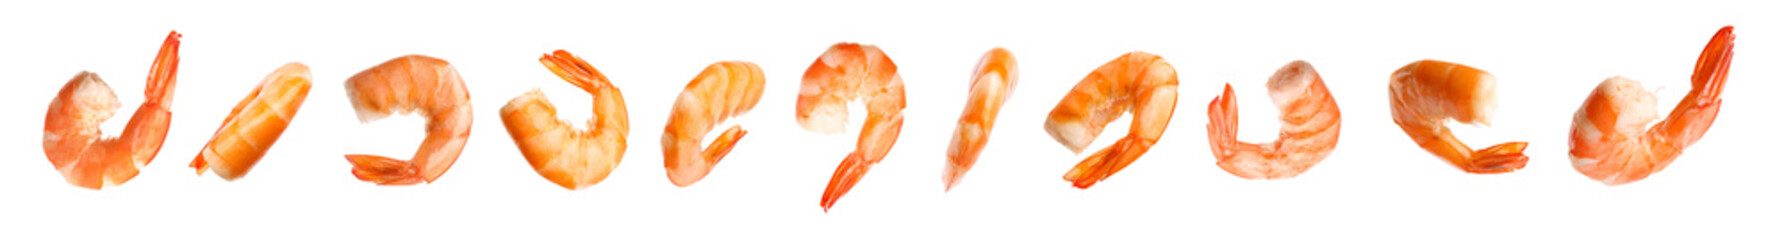 Set of delicious freshly cooked shrimps on white background. Banner design